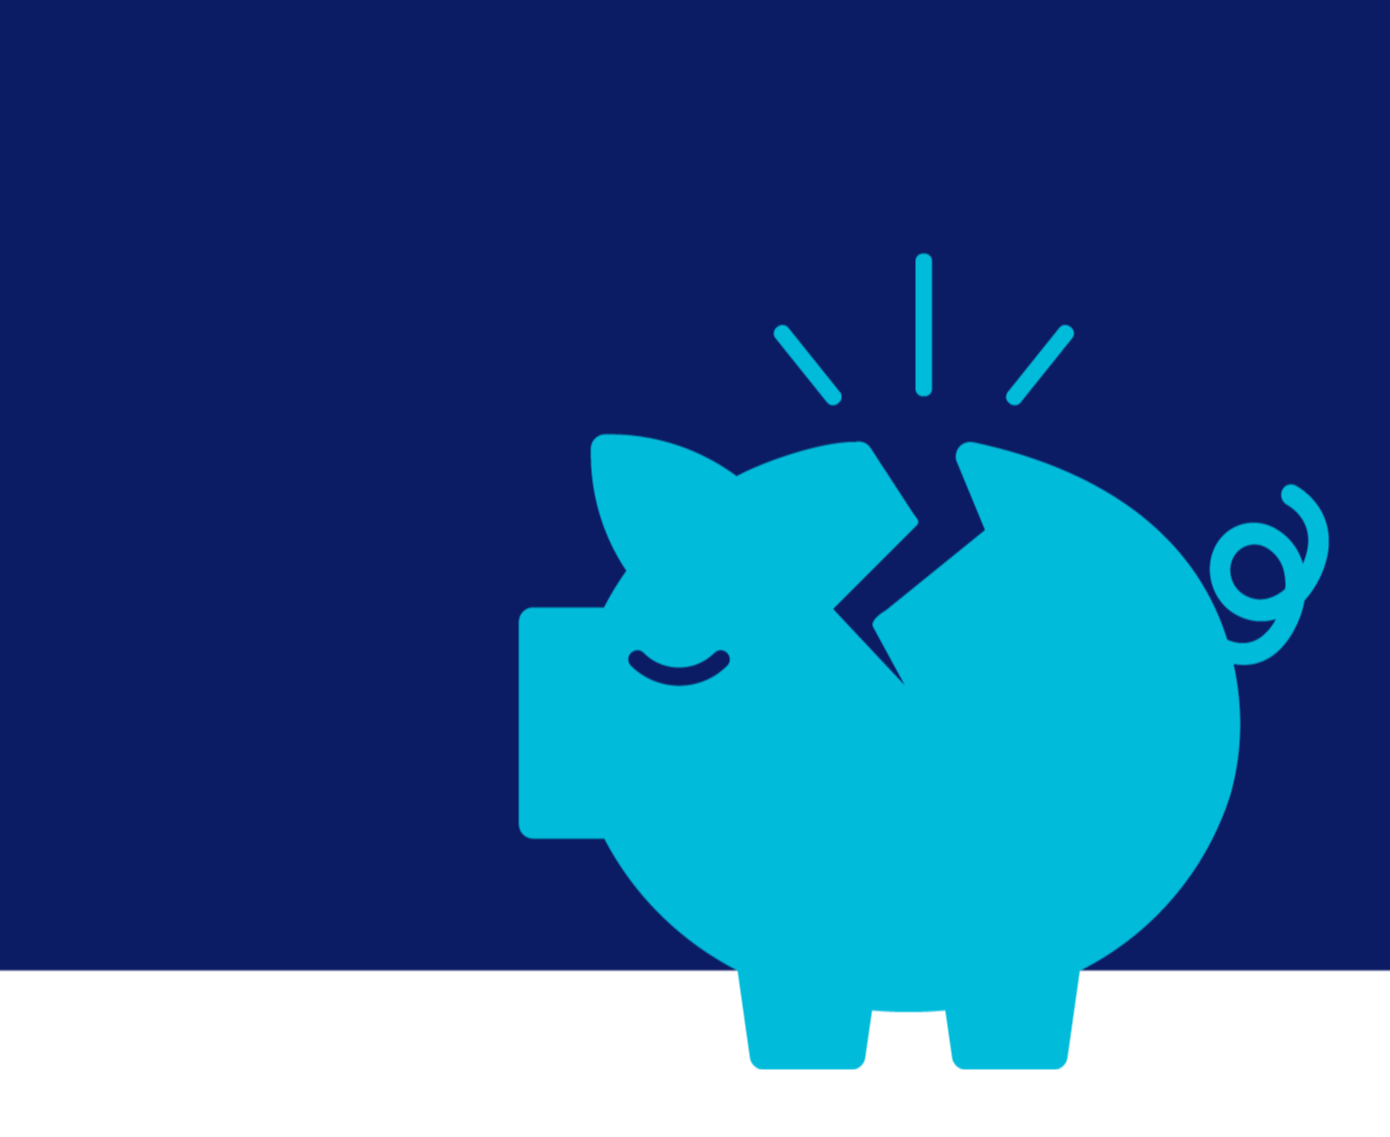 Financial Stress Index - illustration of a blue broken piggy bank